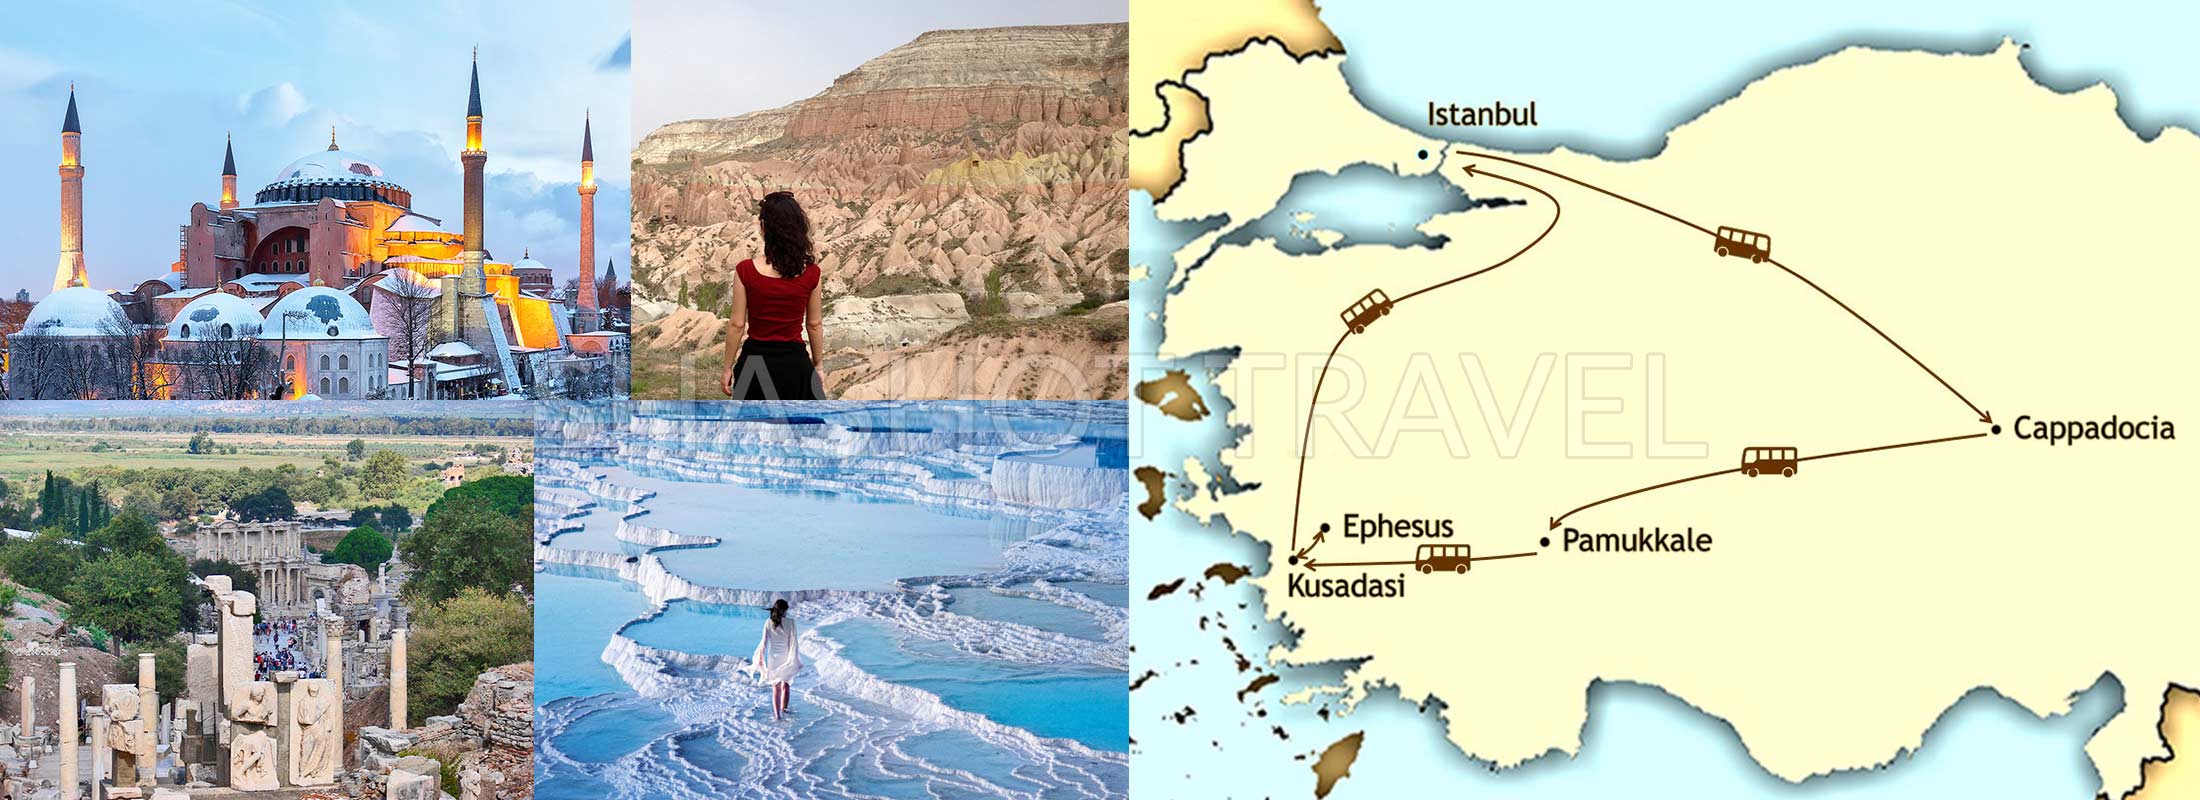 turkey-package-tours-10-days-istanbul-hagia-sophia-museum-blue-mosque-bosphorus-cappadocia-virgin-mary-house-ephesus-pamukkale-hierapolis-map